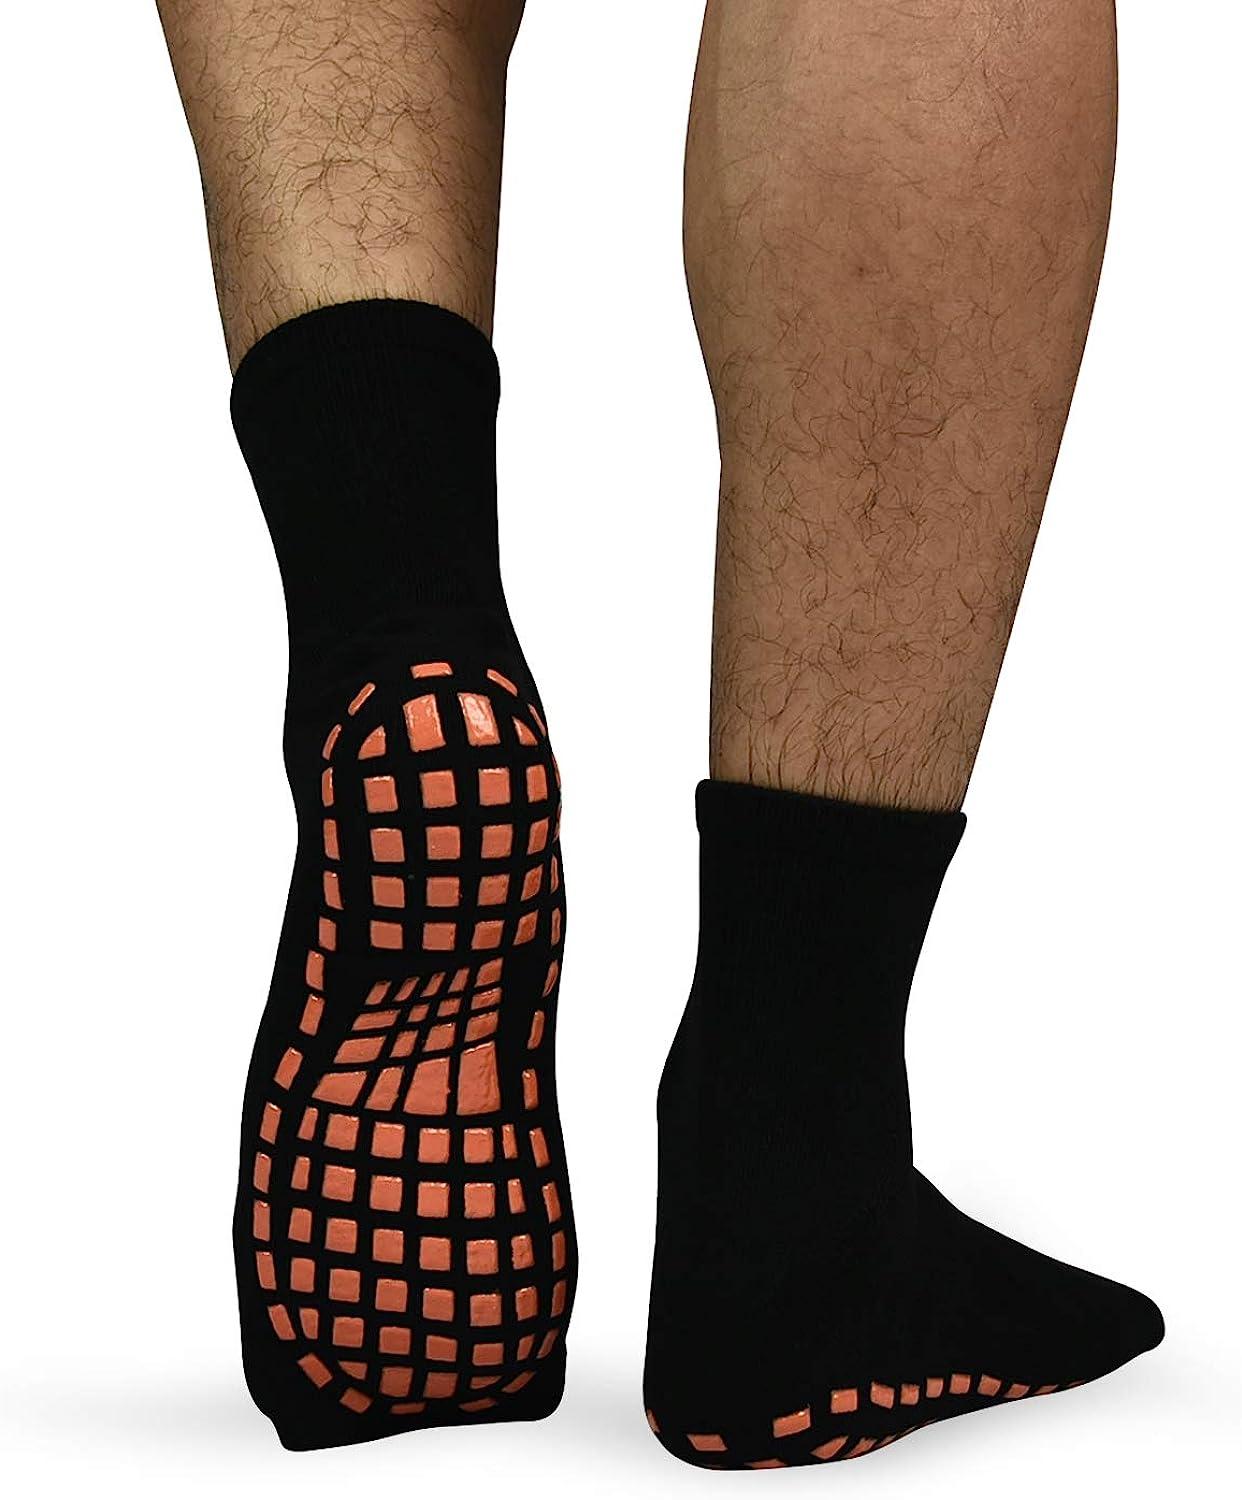 Honey_Louts mens non-slip grip socks for yoga, pilates, hospital, anti-skid slipper  socks on home barre workout sports